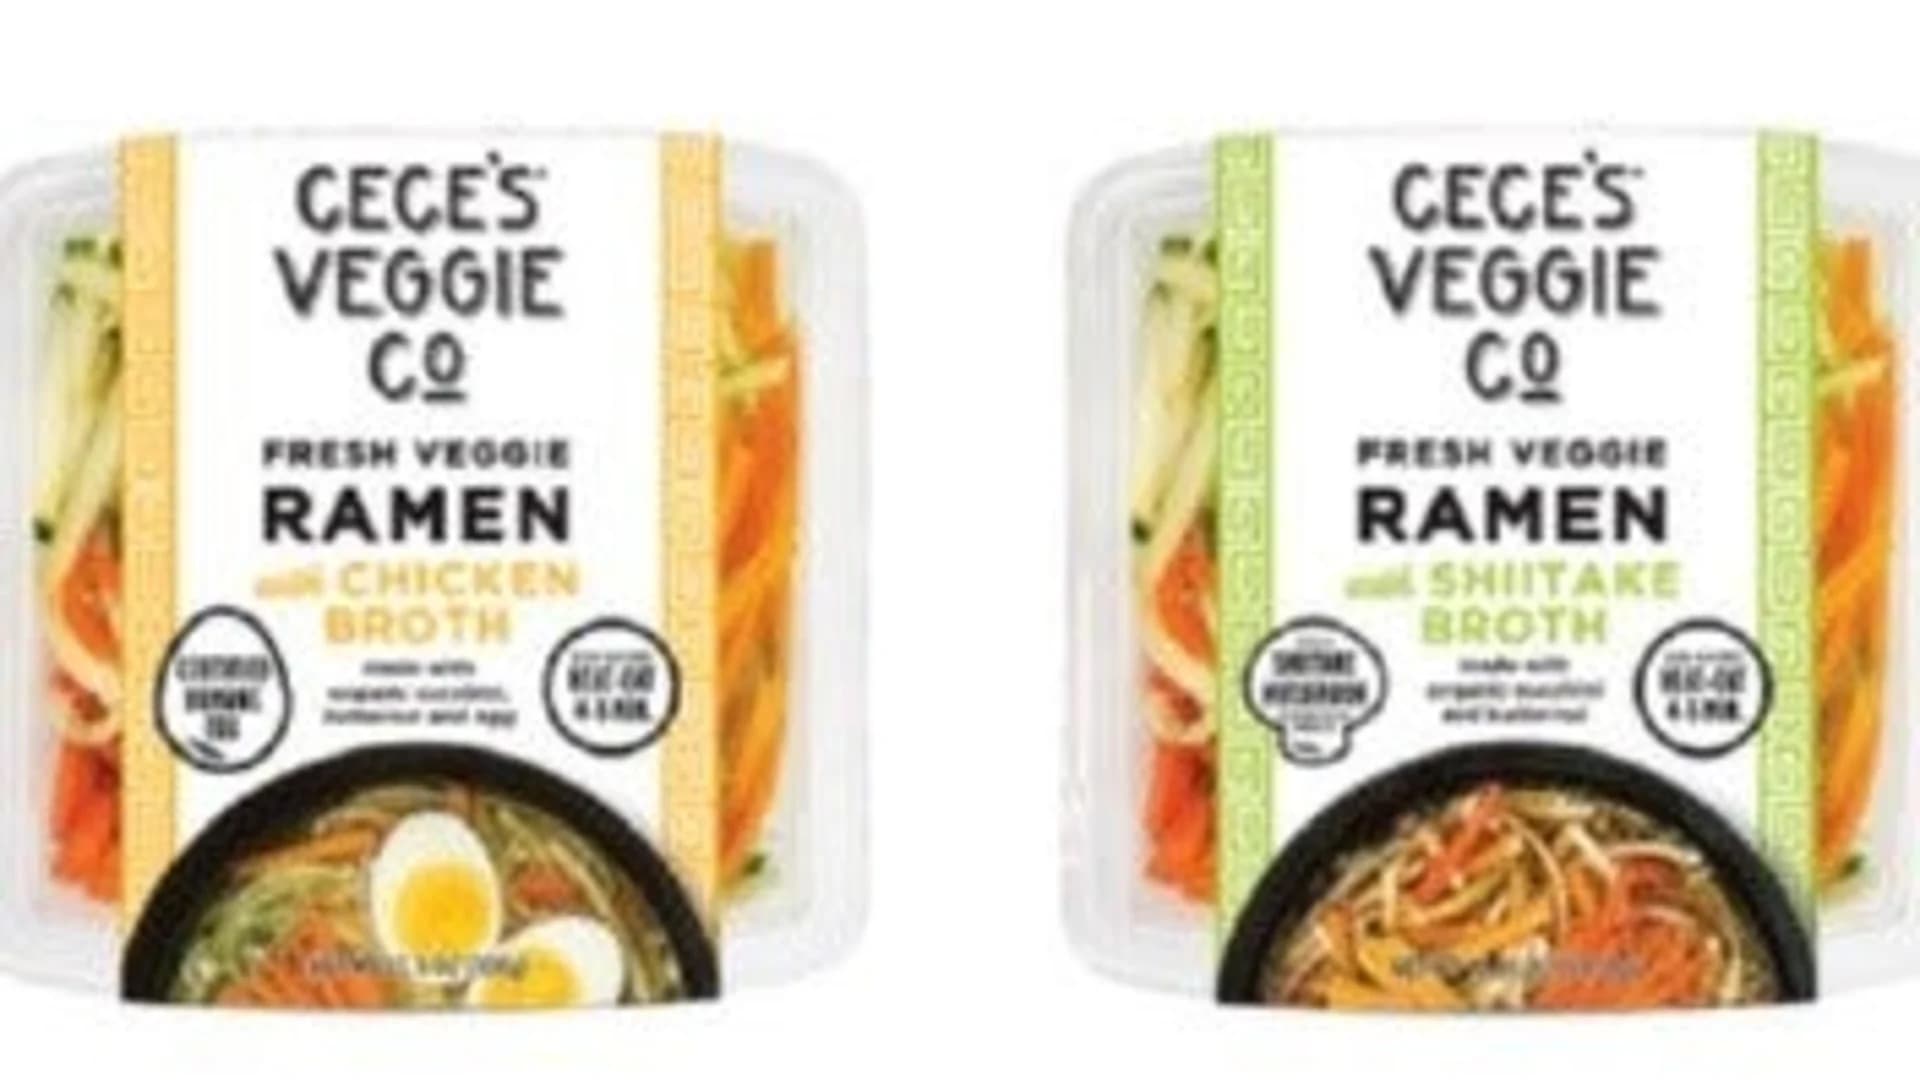 Veggie Noodle Co. voluntarily recalls ramen over listeria concerns